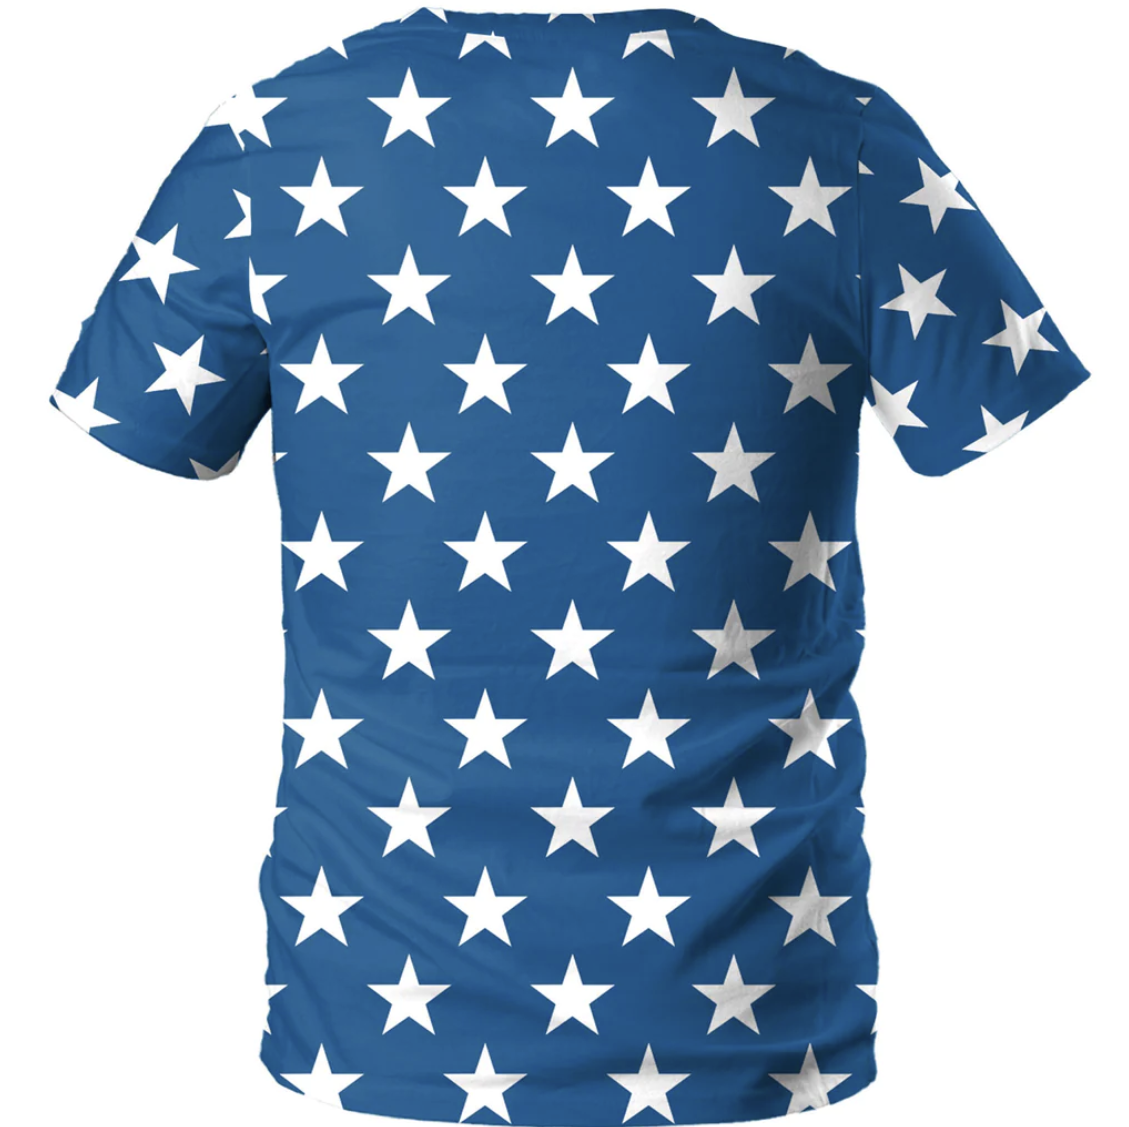 3D American Flag Printed Short Sleeve T-shirt